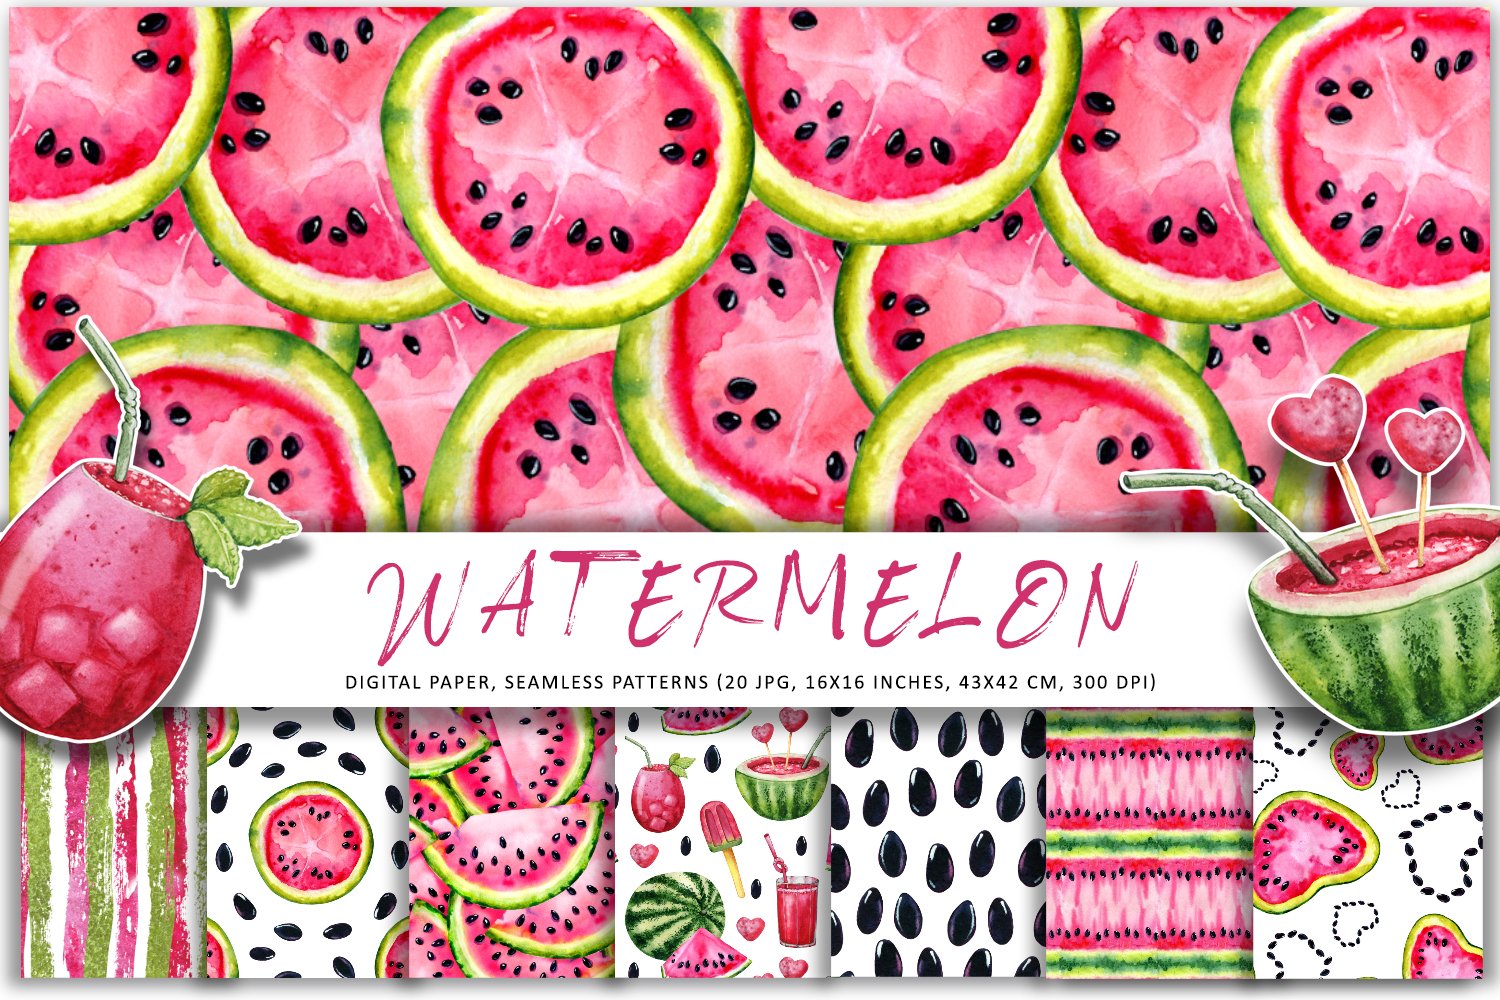 Diverse of watermelon seamless patterns.